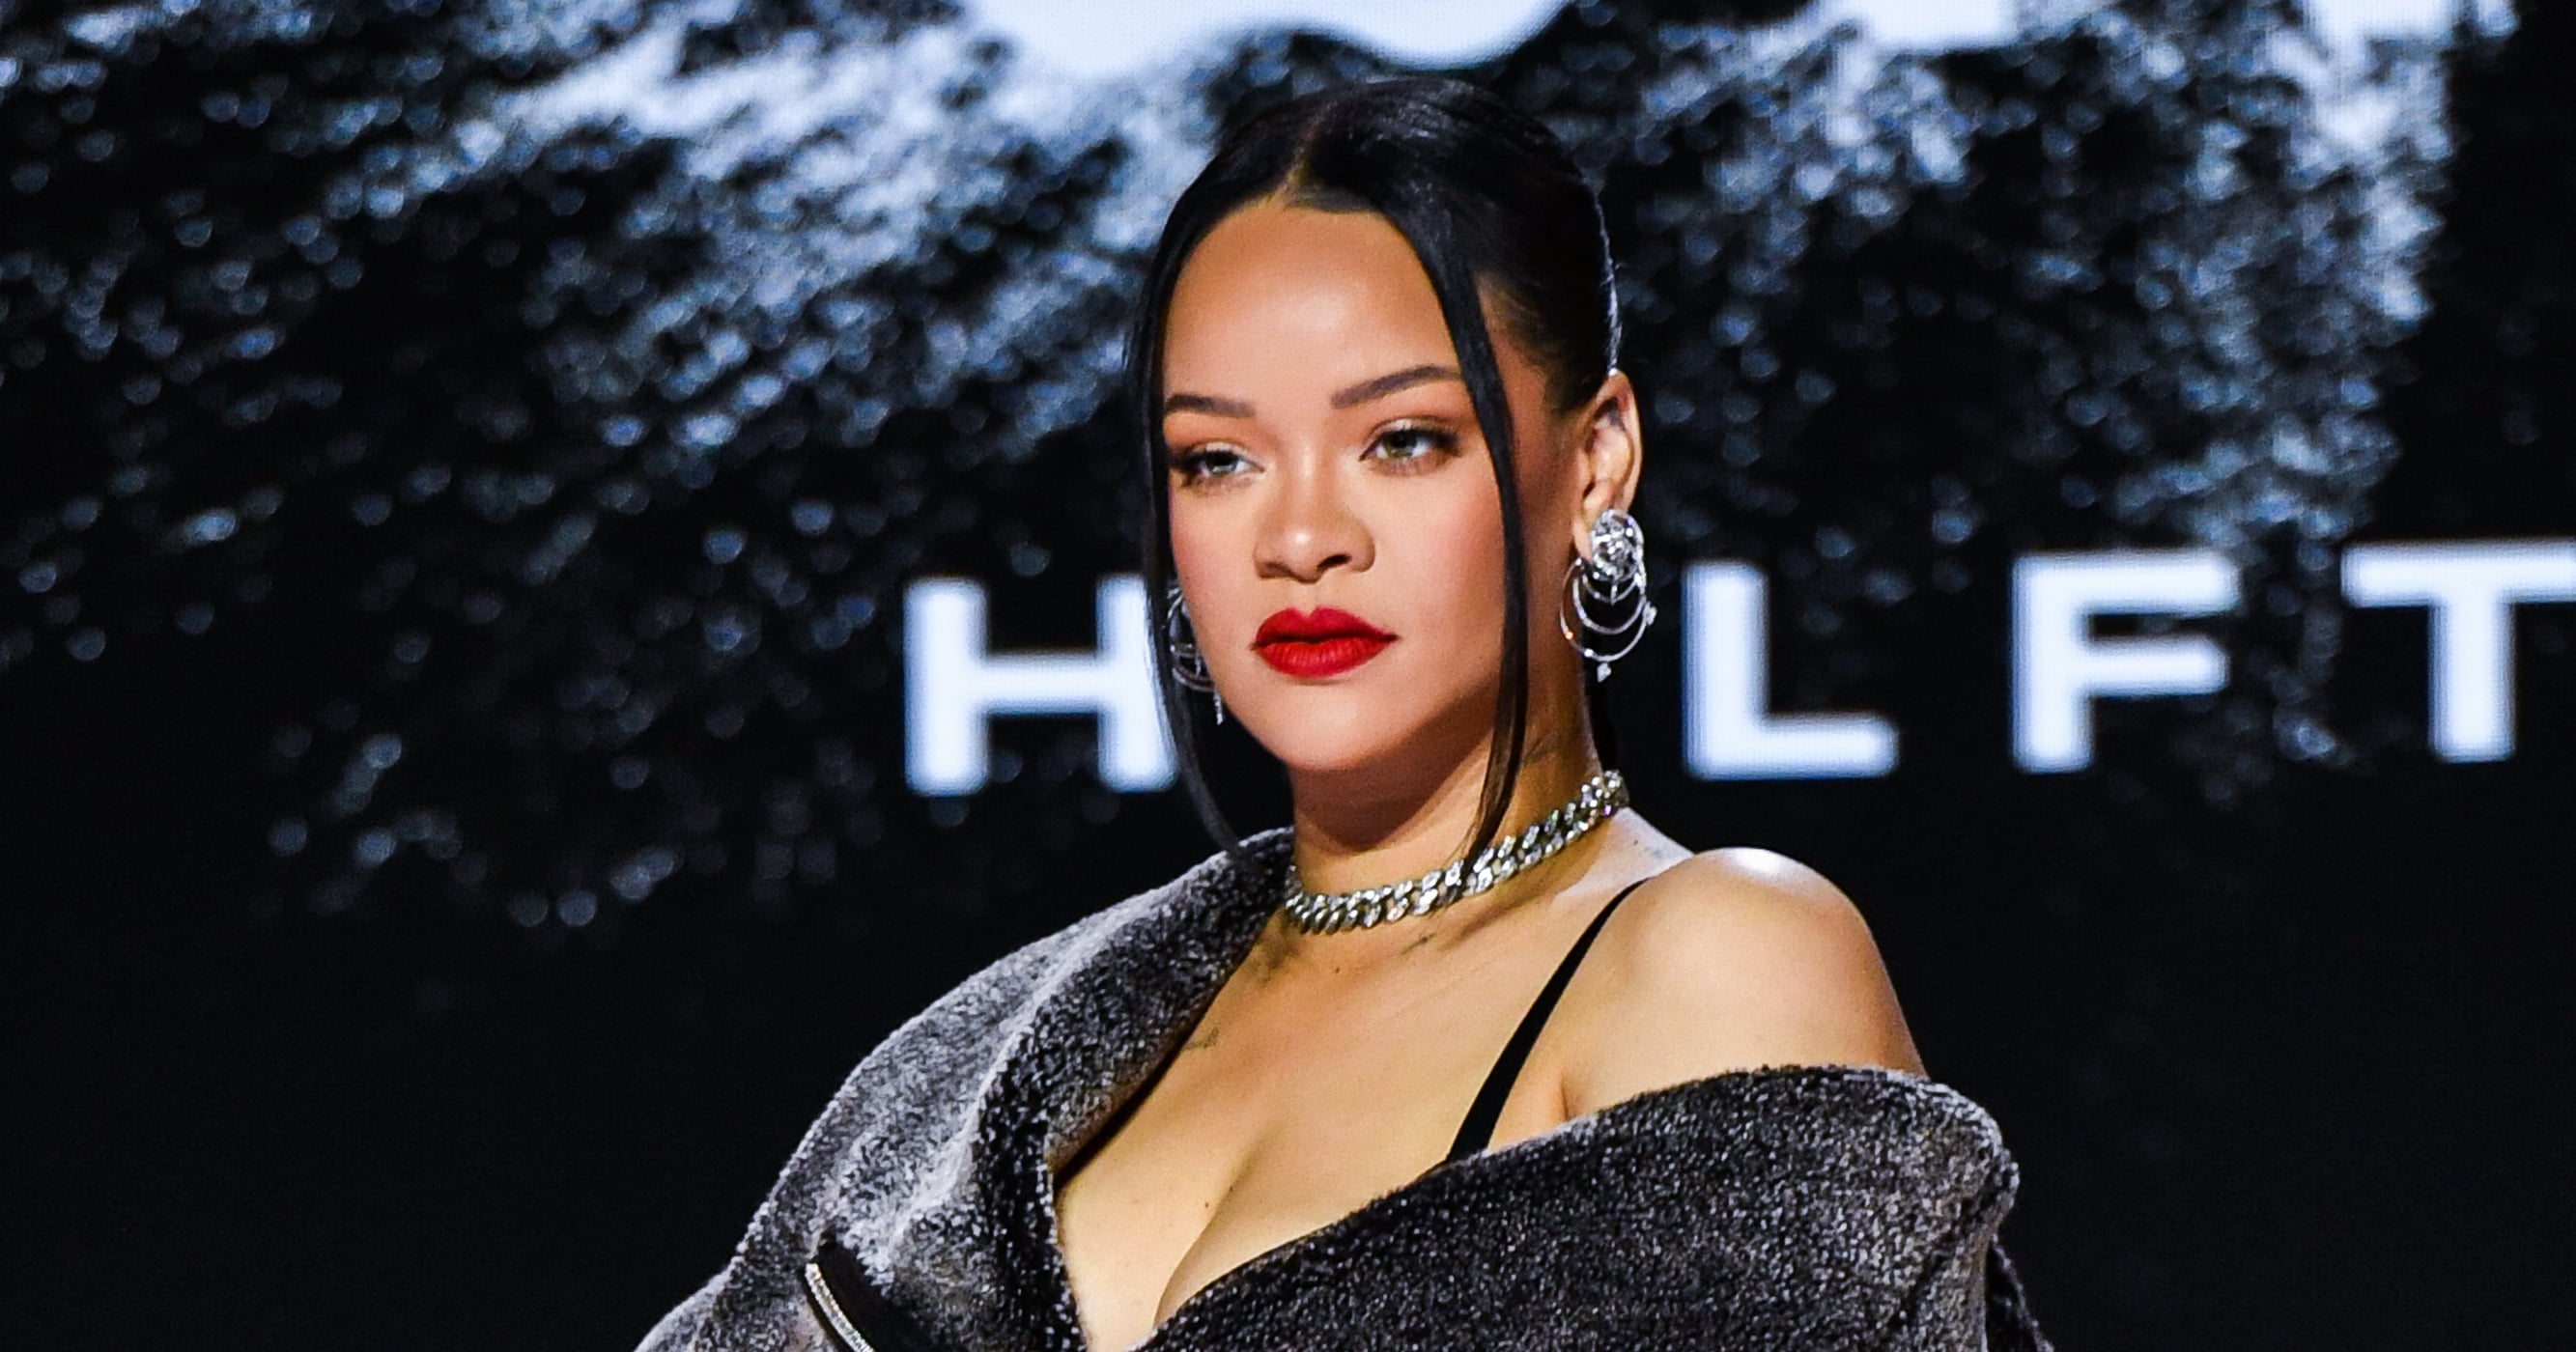 Rihanna Shares New Photo of Her Son Ahead of Oscars | POPSUGAR Celebrity